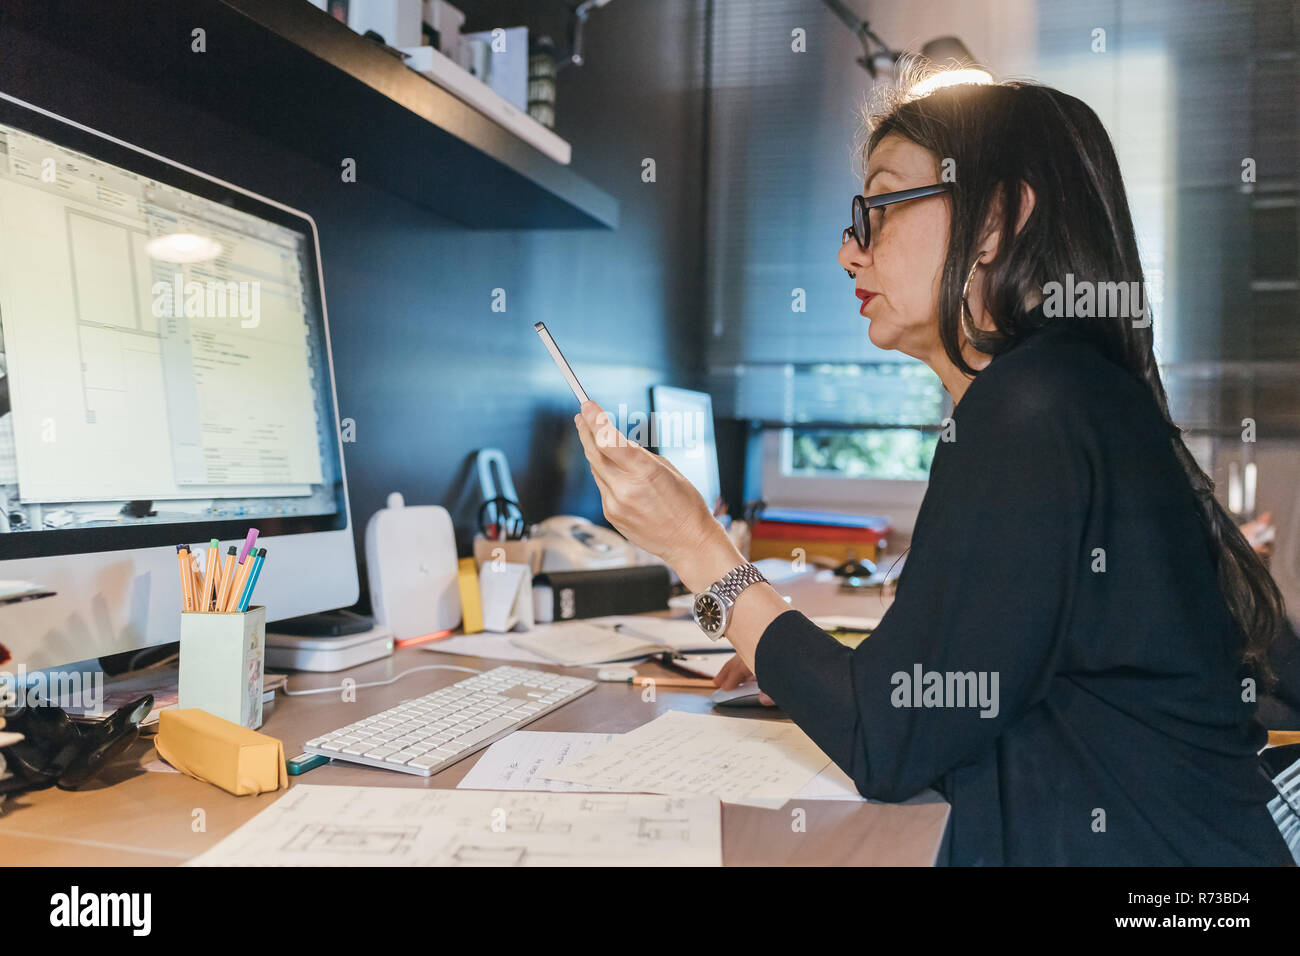 Woman using cellphone at desktop Stock Photo